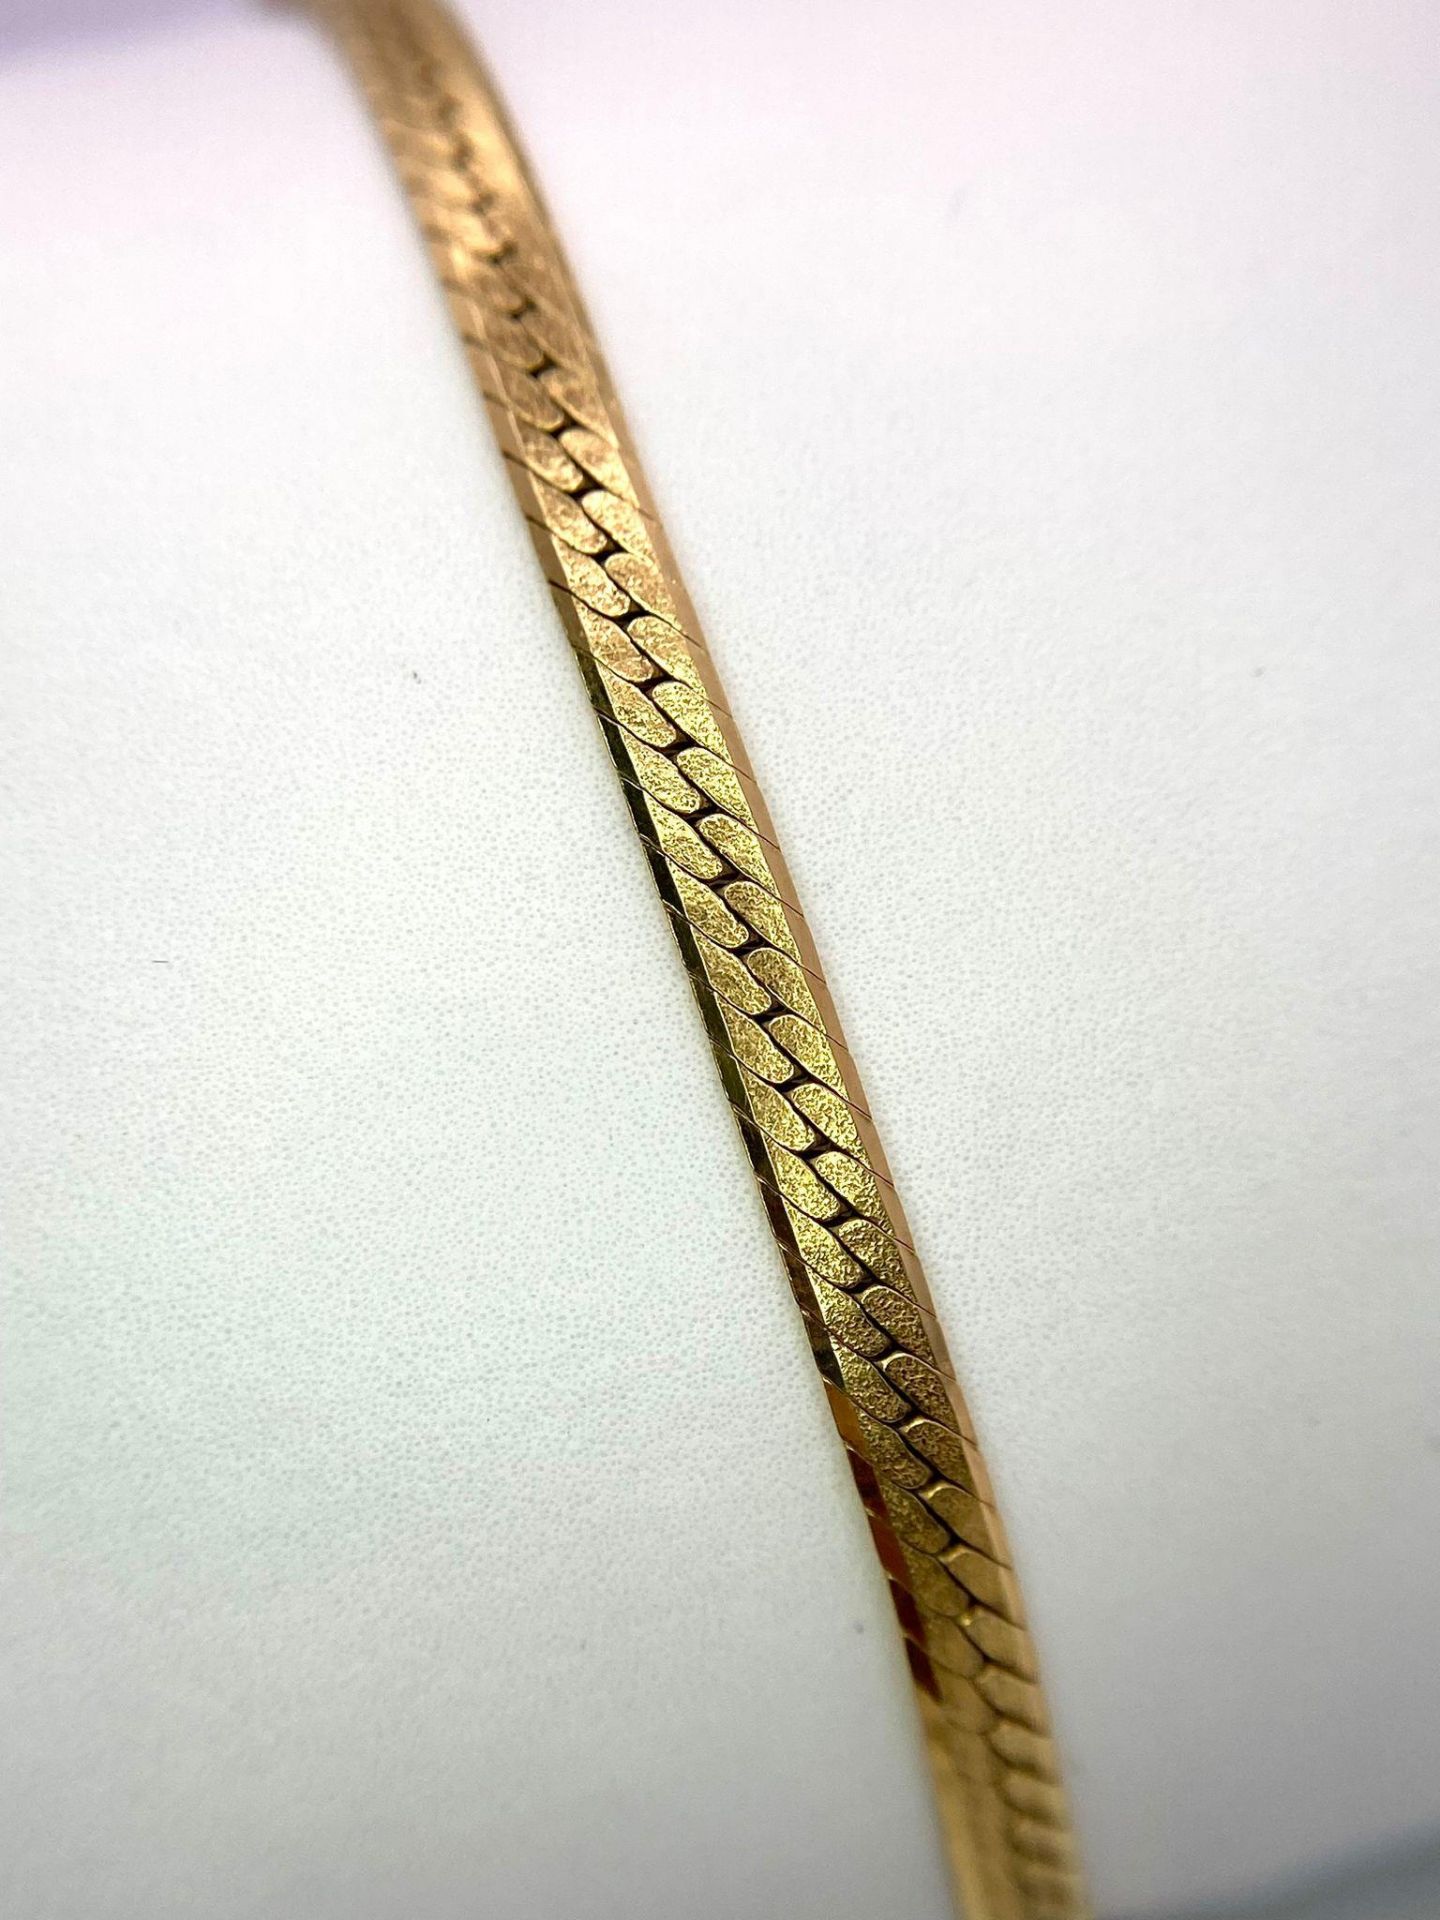 A 10k Yellow Gold Herringbone Bracelet. 17cm. 5g weight. - Image 3 of 4